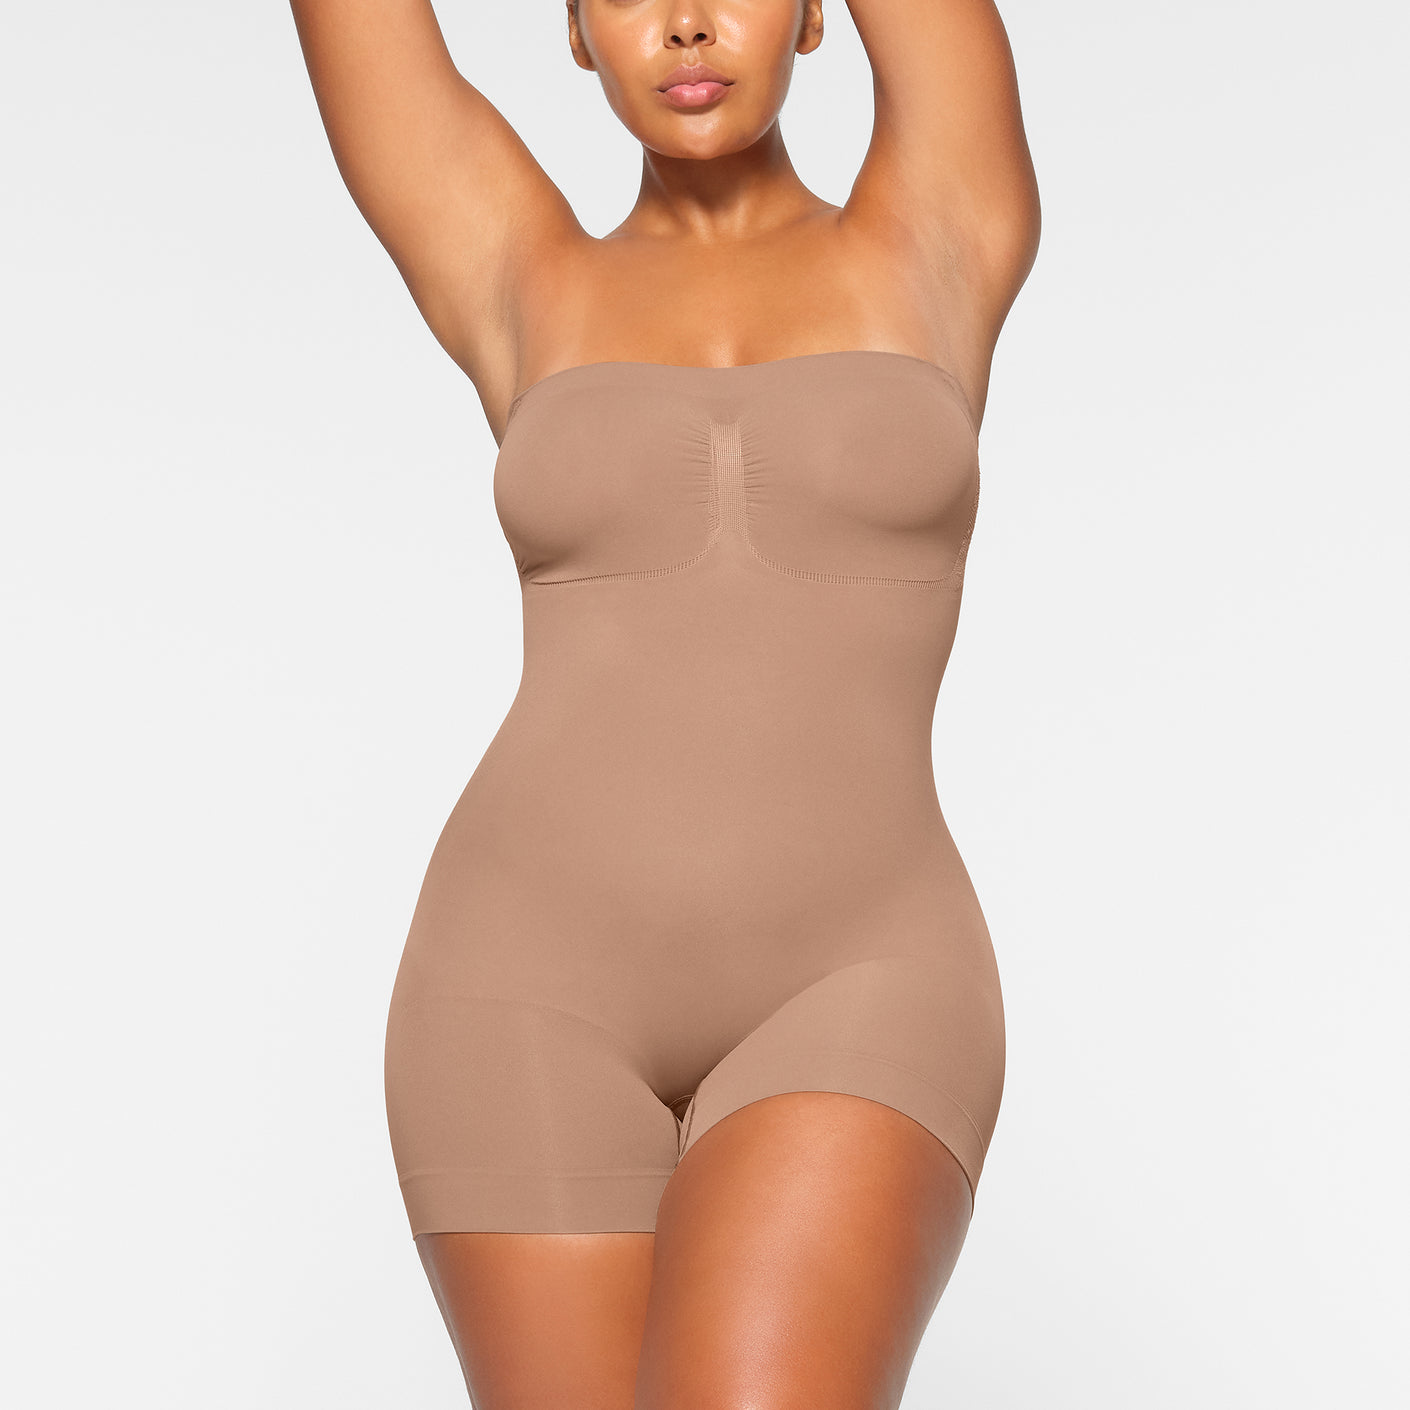 Strapless Shapewear Bodysuit for Women Tummy Control Seamless Full